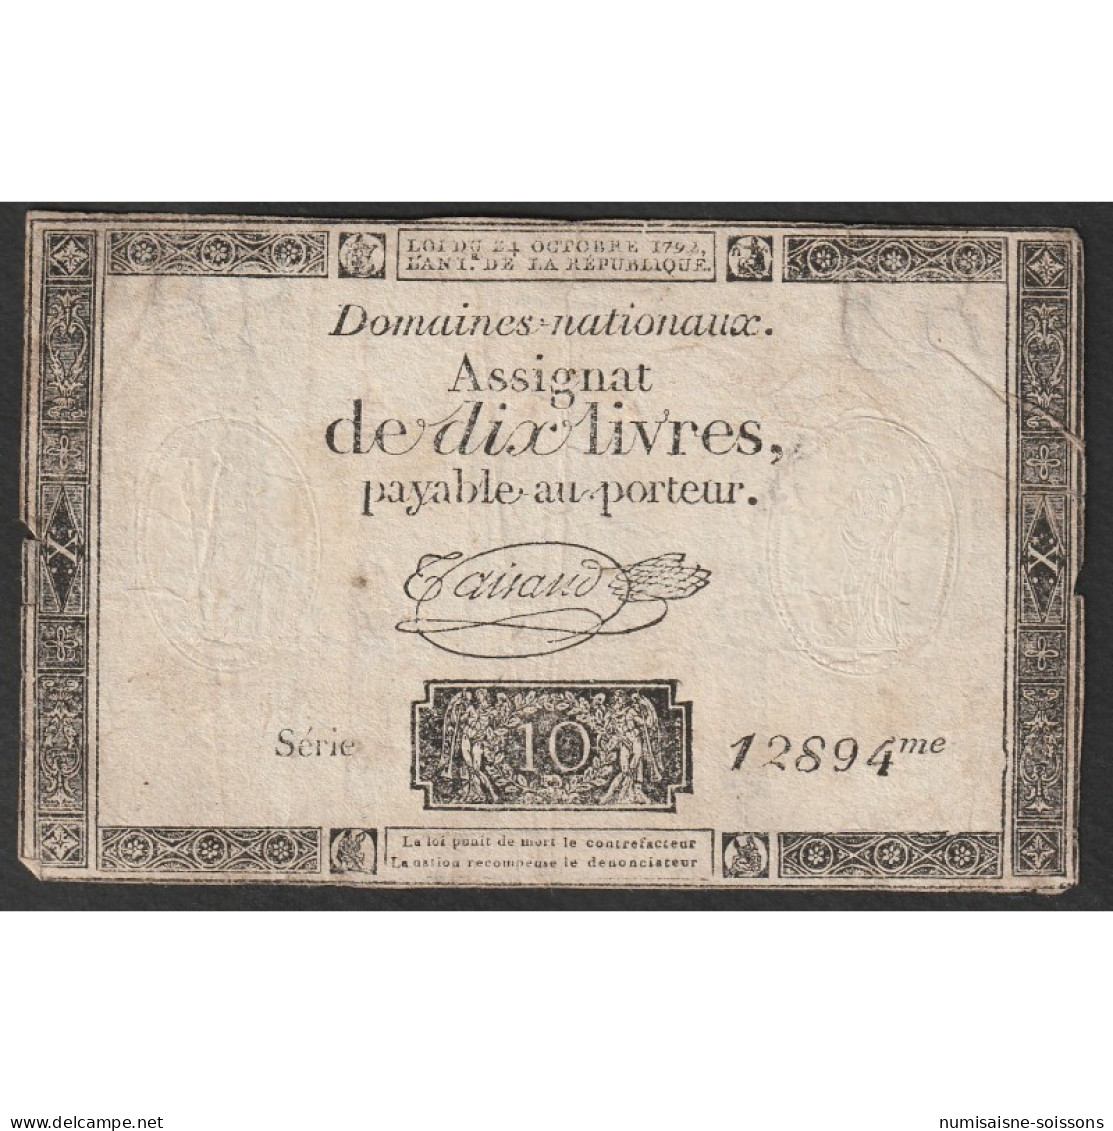 ASSIGNAT DE 10 LIVRES - 24/10/1792 - DOMAINES NATIONAUX - SERIE 12894 - TB+ - Assignats